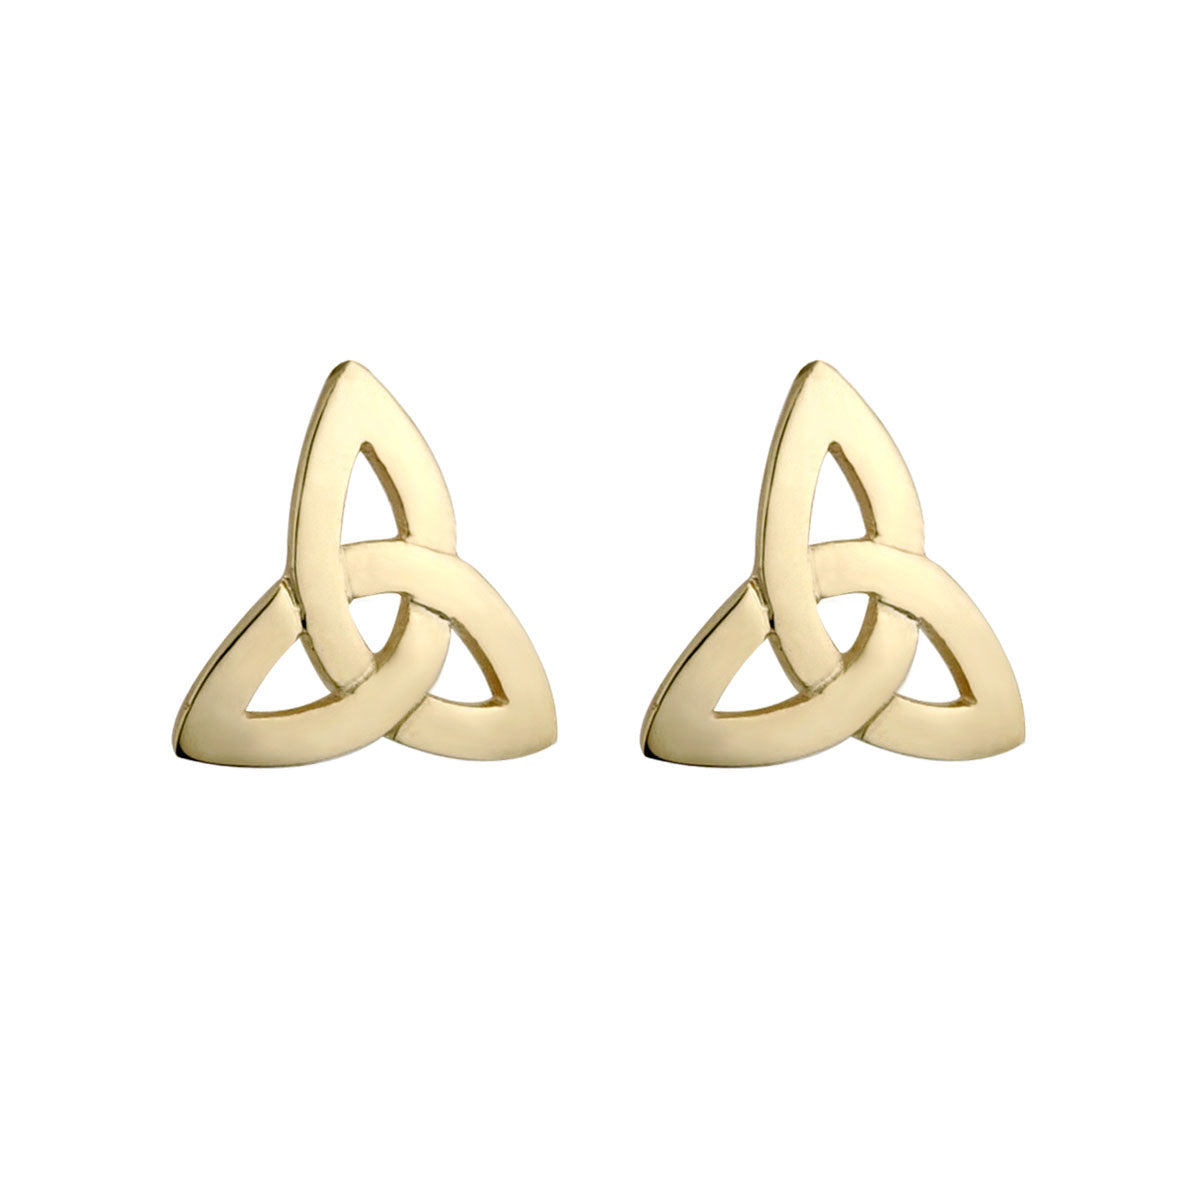 nine karat Gold Trinity Knot Stud Earrings S3659 from Solvar Jewellers, Ireland